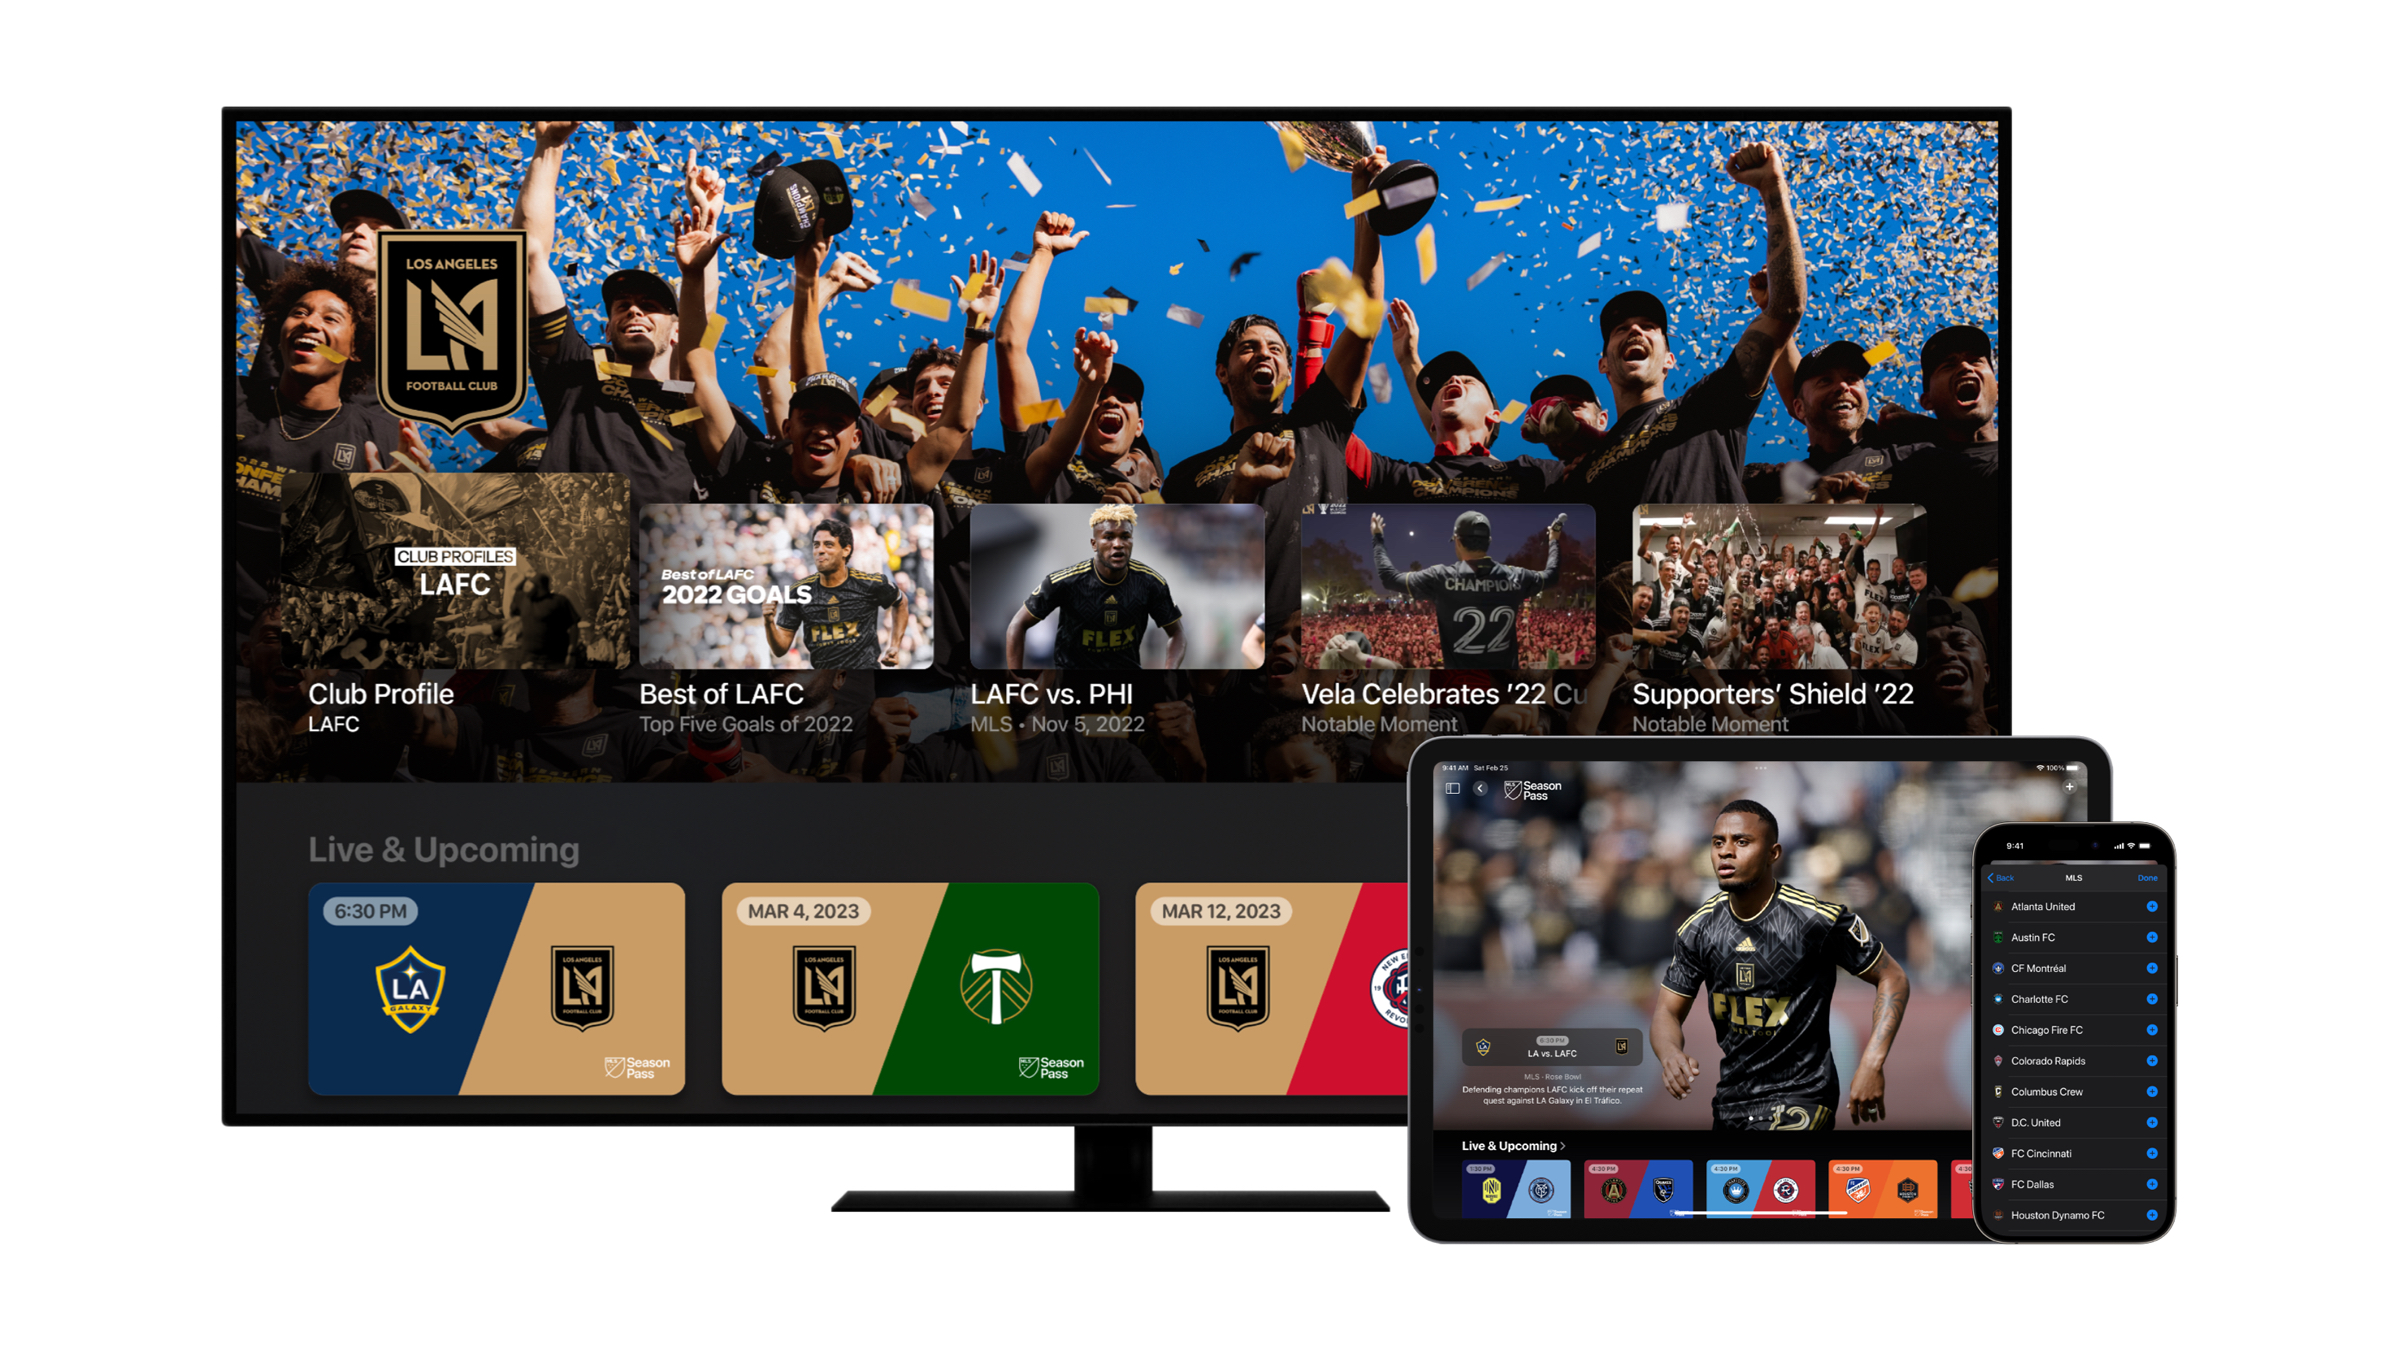 Philadelphia Union feature in 1 of 6 free MLS games on Apple TV